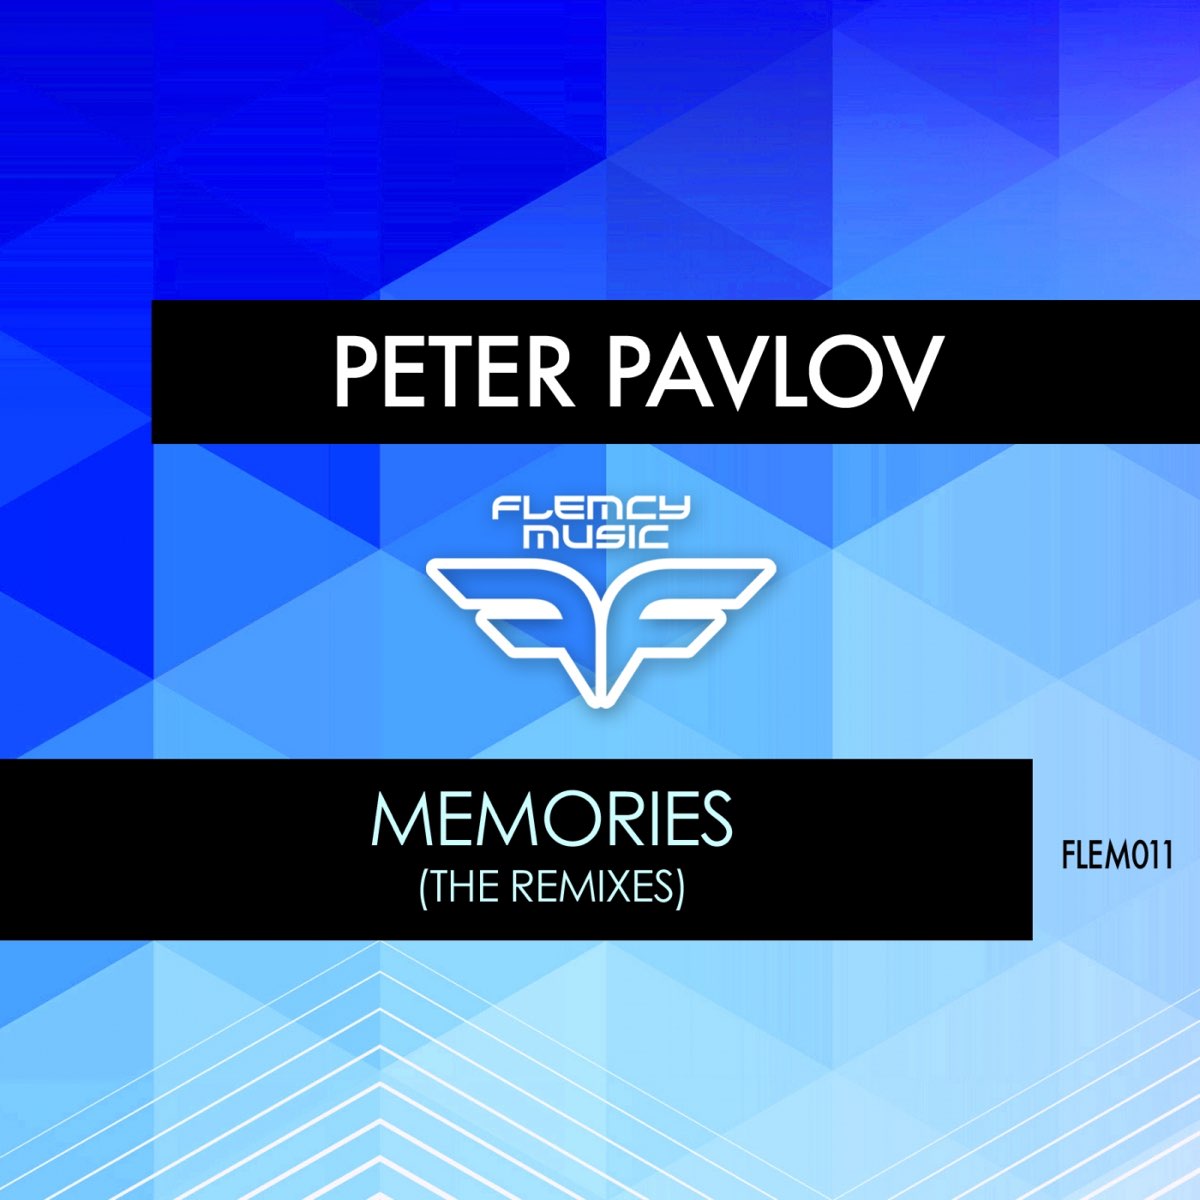 Music Memories Remix Original. Voice remix